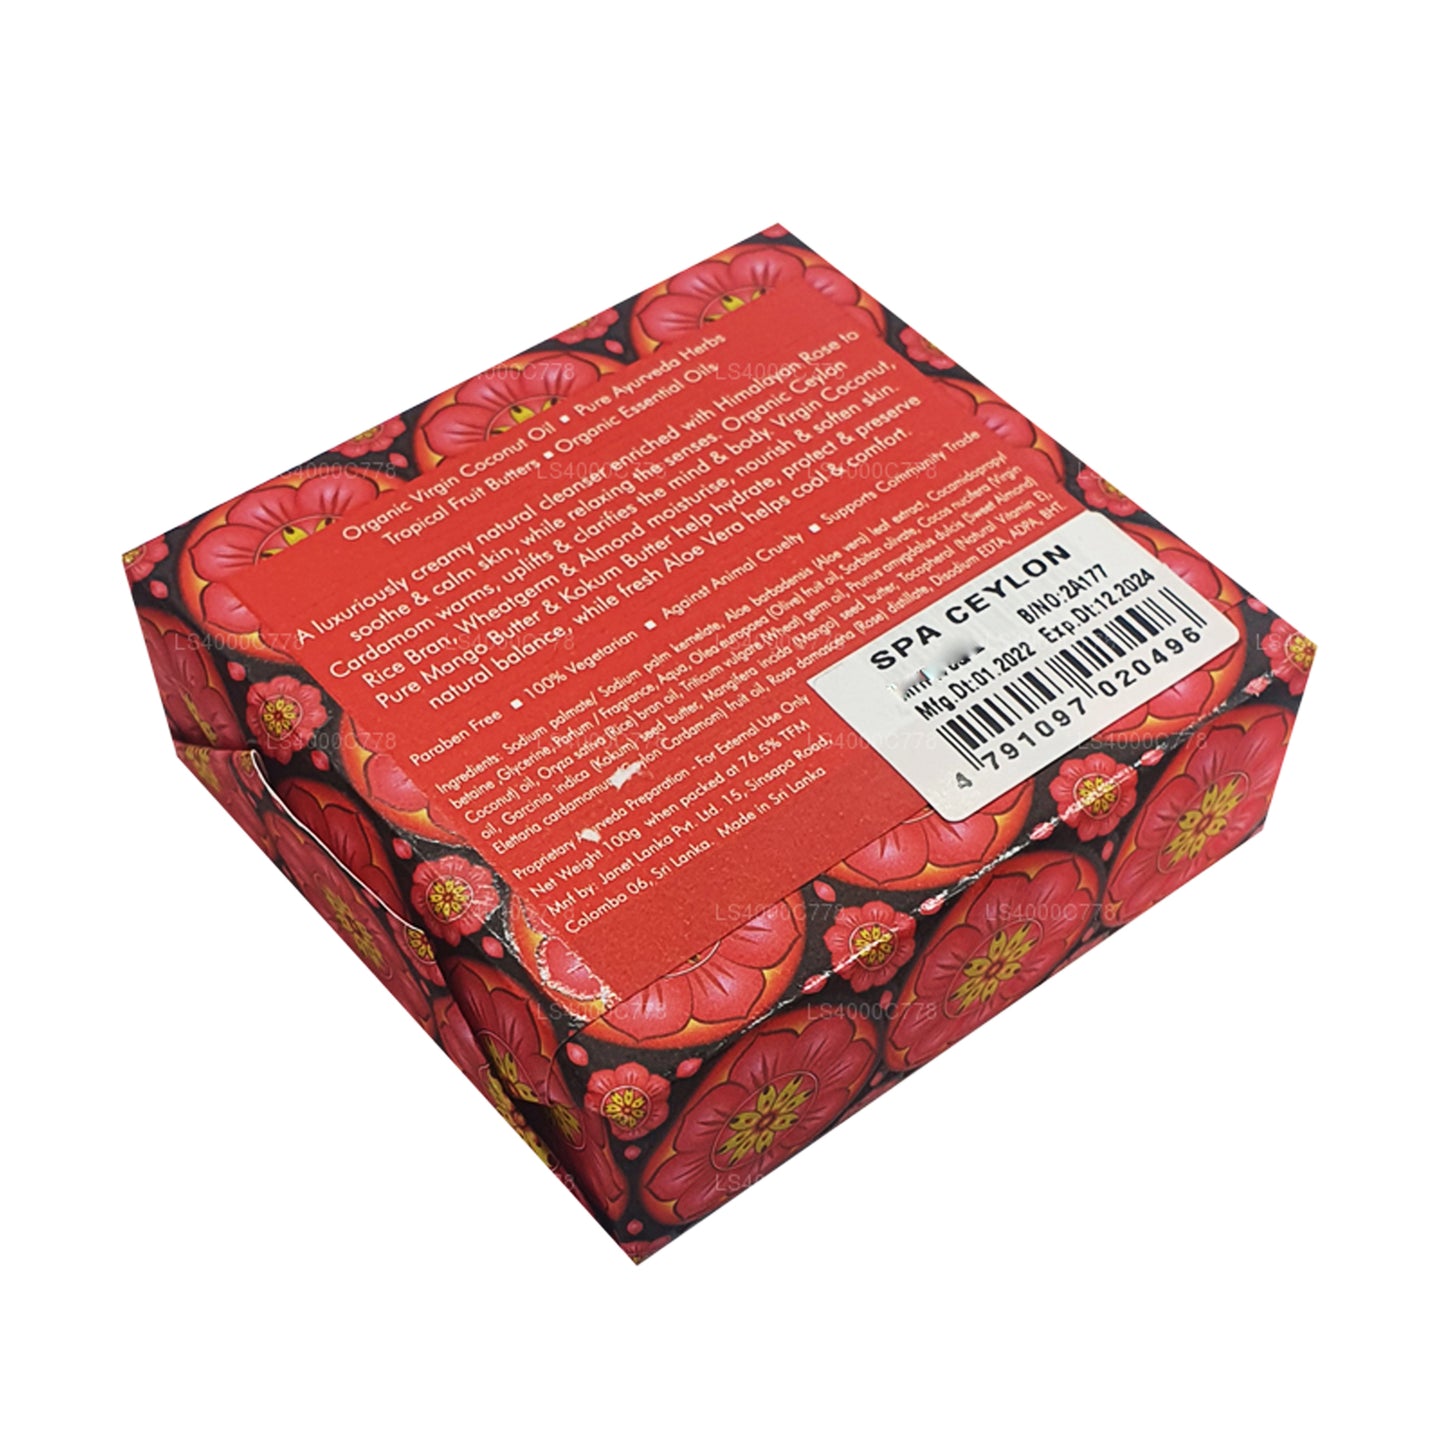 Spa Ceylon Cardamom Rose Luxury Soap (100g)